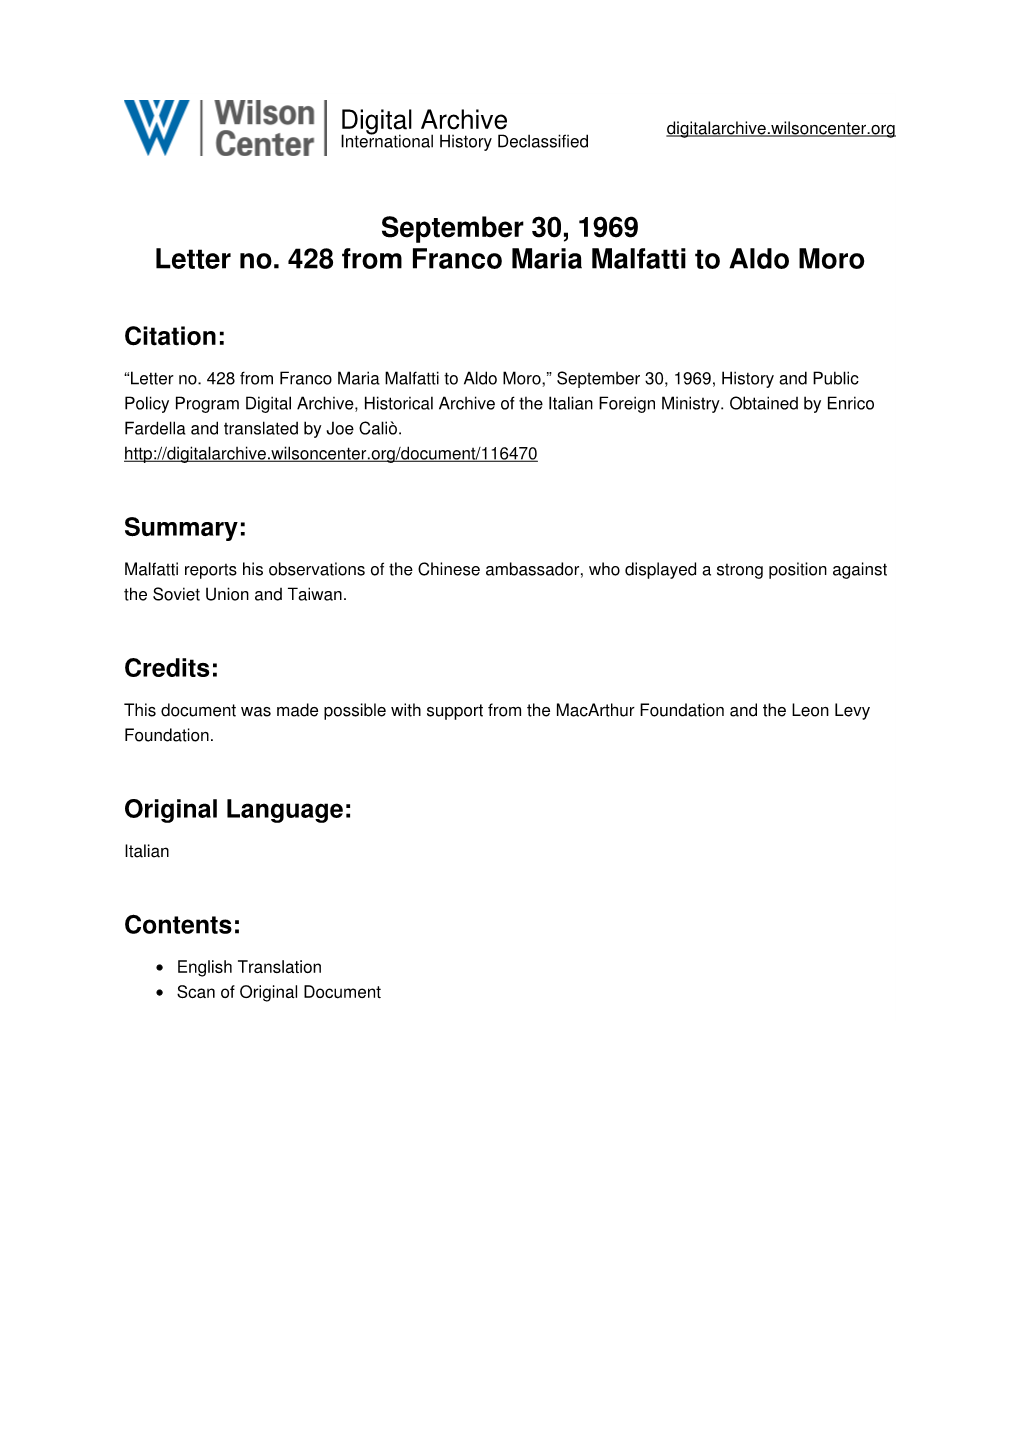 September 30, 1969 Letter No. 428 from Franco Maria Malfatti to Aldo Moro